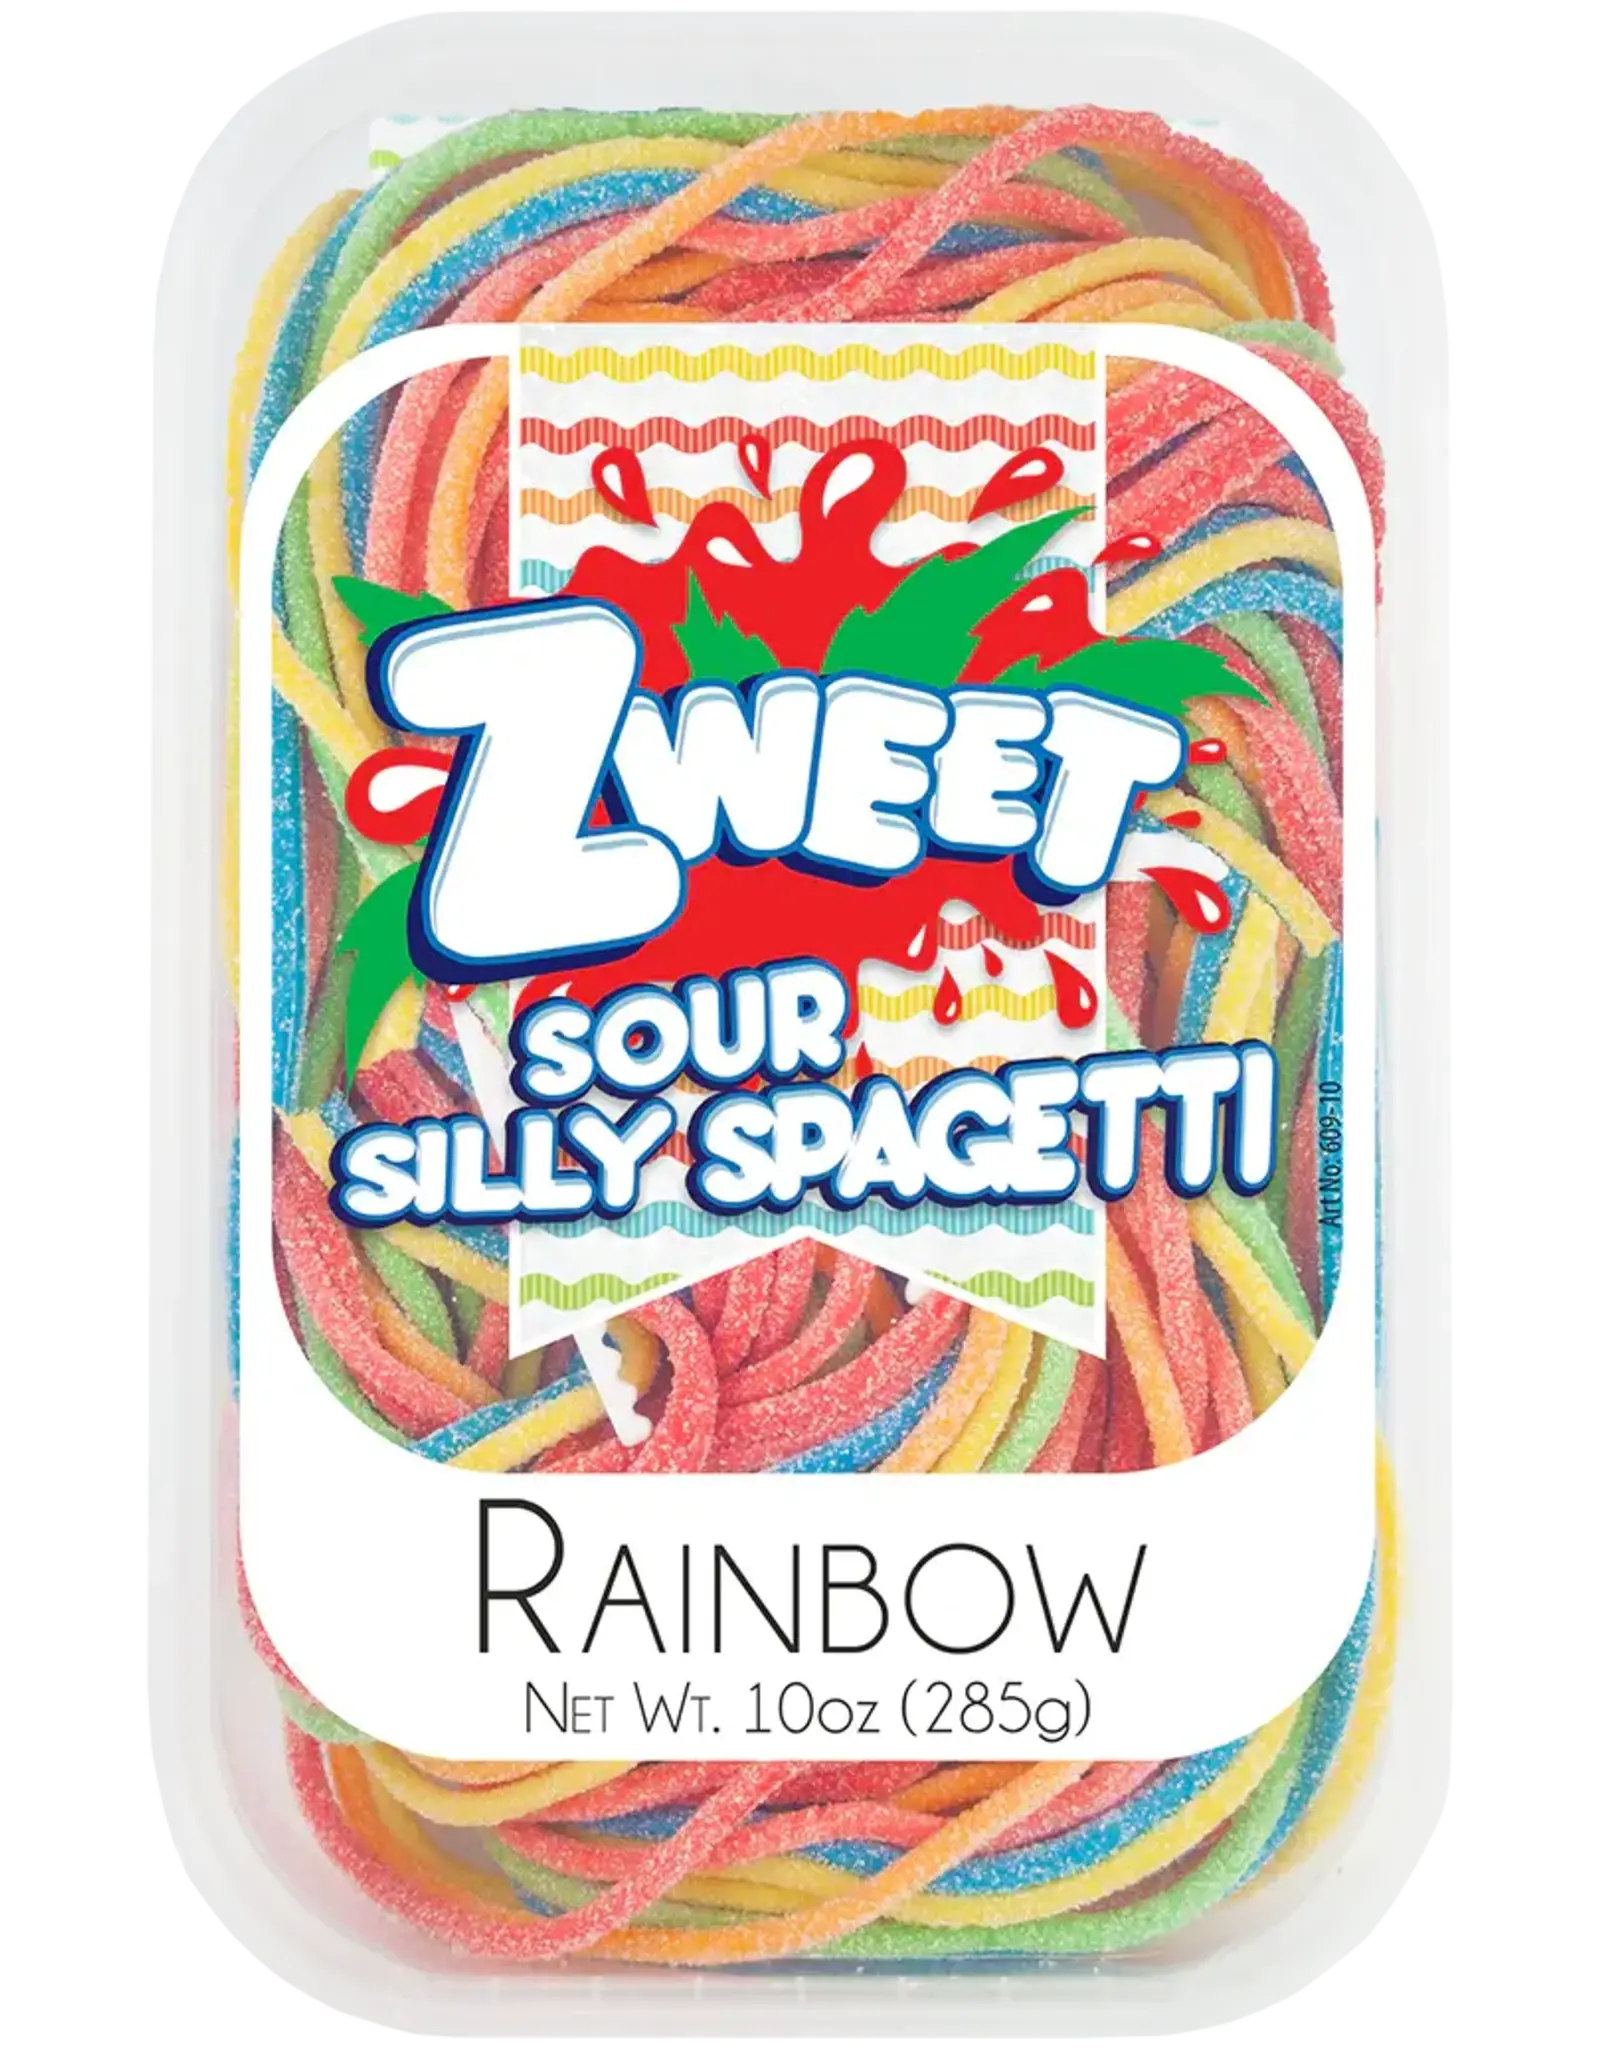 Zweet Sour Spagetti Rainbow Tray (Halal & Kosher Certified)